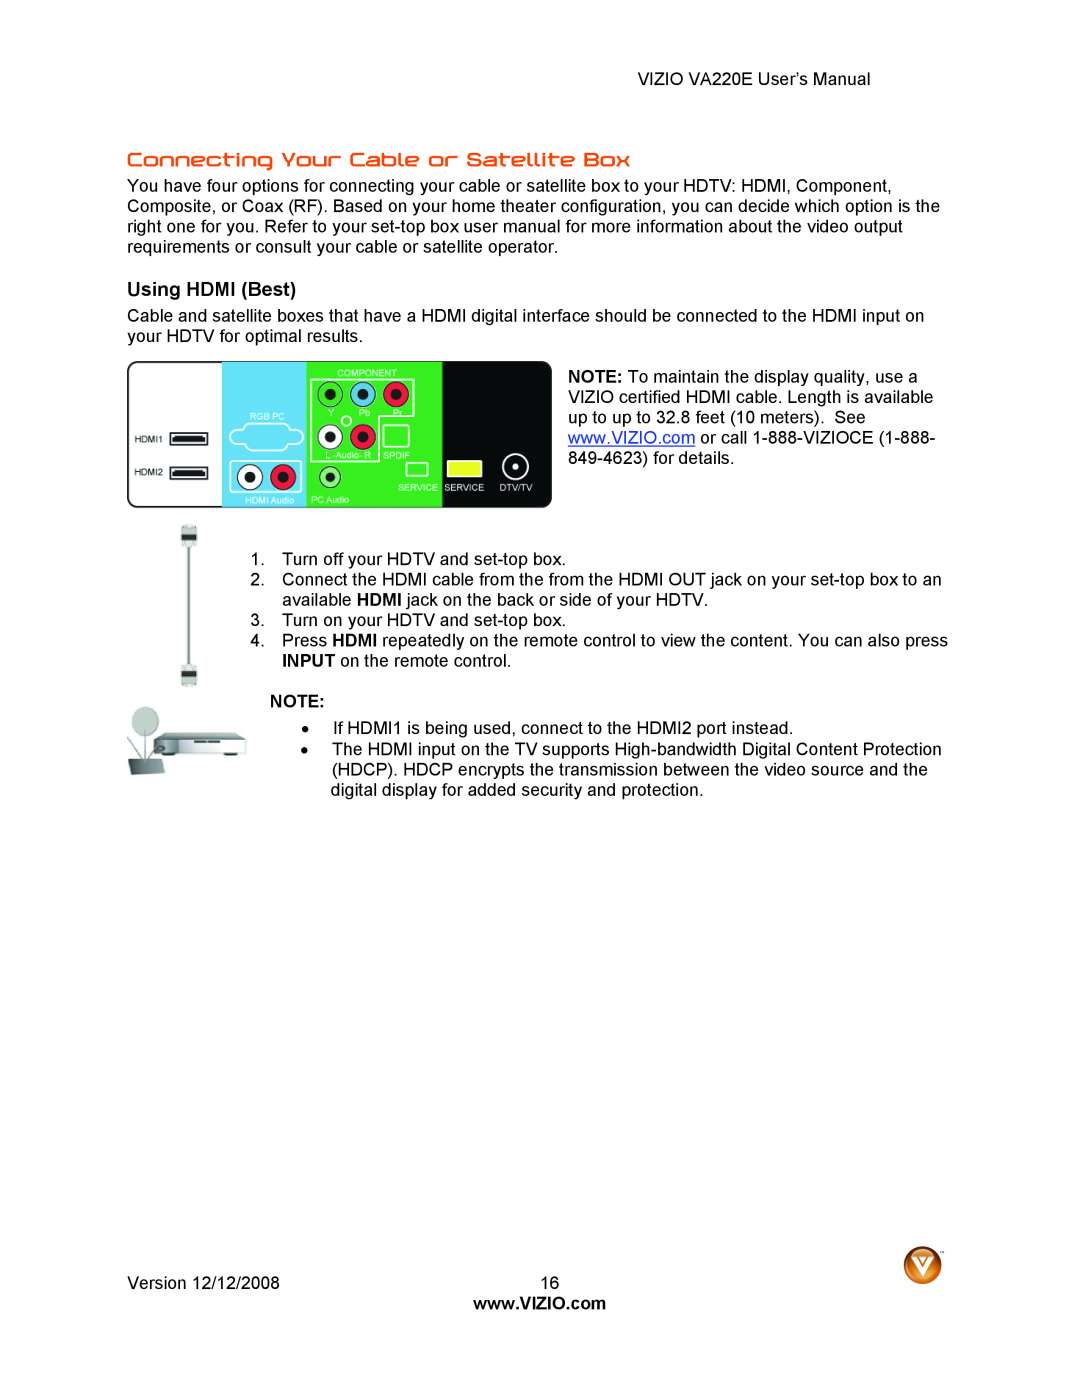 Vizio VA220E user manual Connecting Your Cable or Satellite Box, Using HDMI Best 